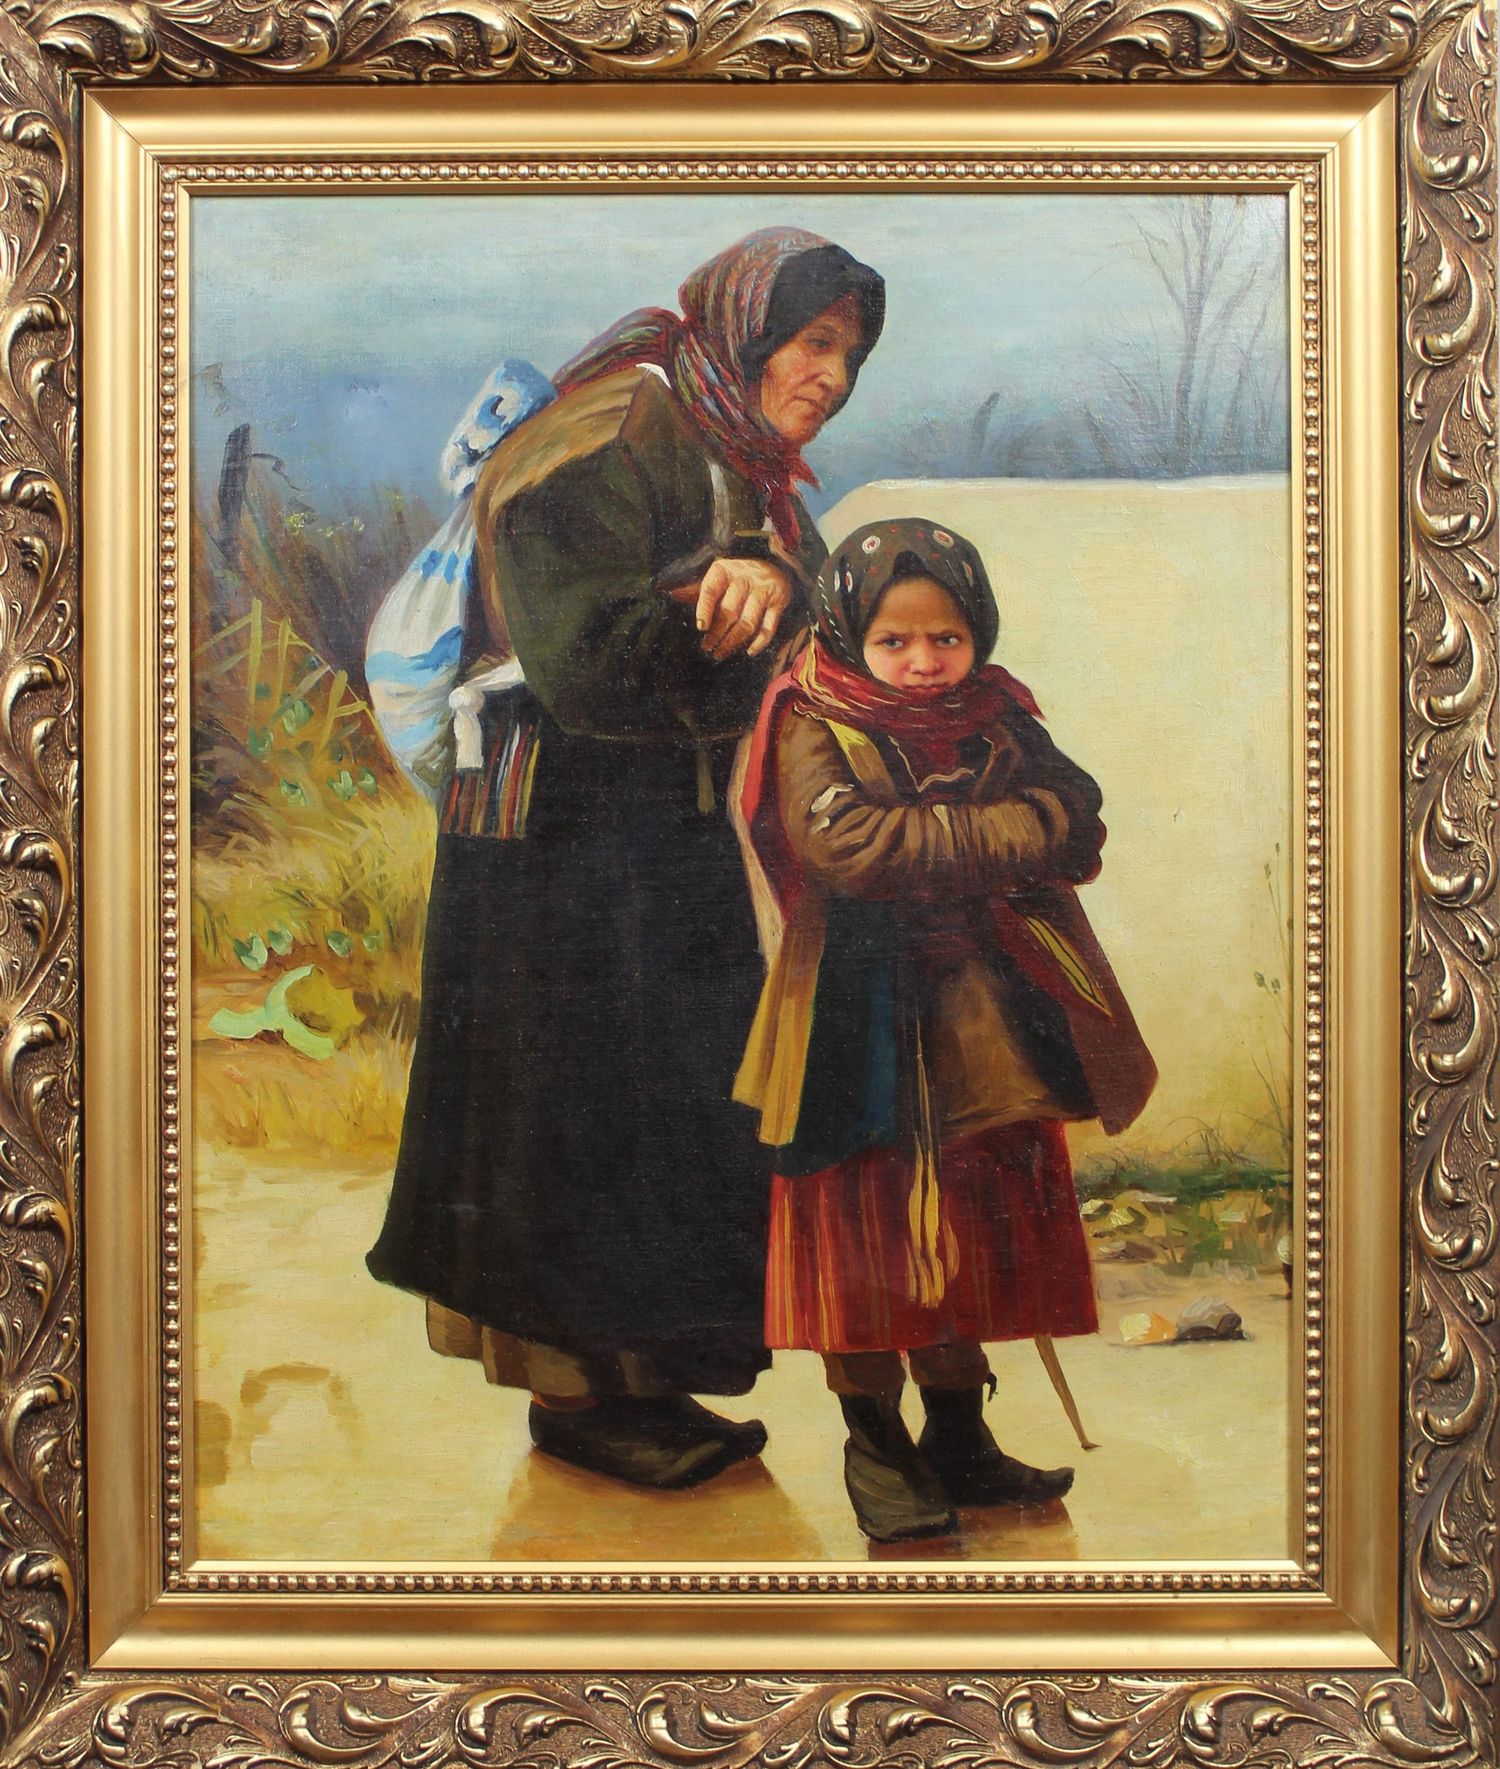 "Grandmother with granddaughter (copy of Tvorozhnikov)"